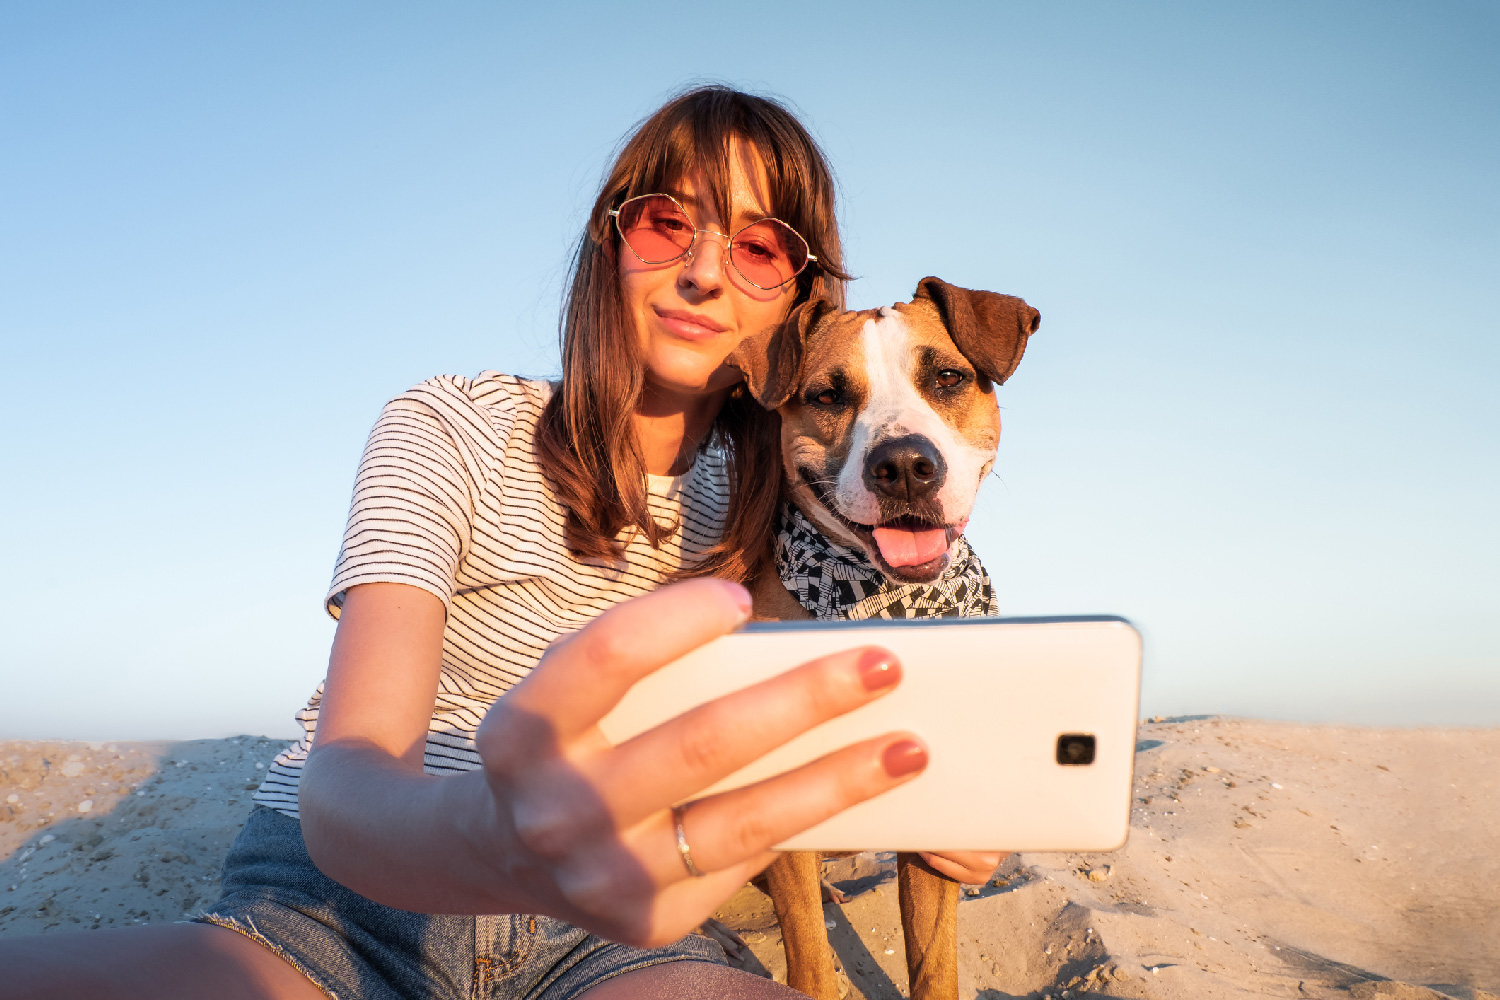 5 best selfie filters for selfie photos